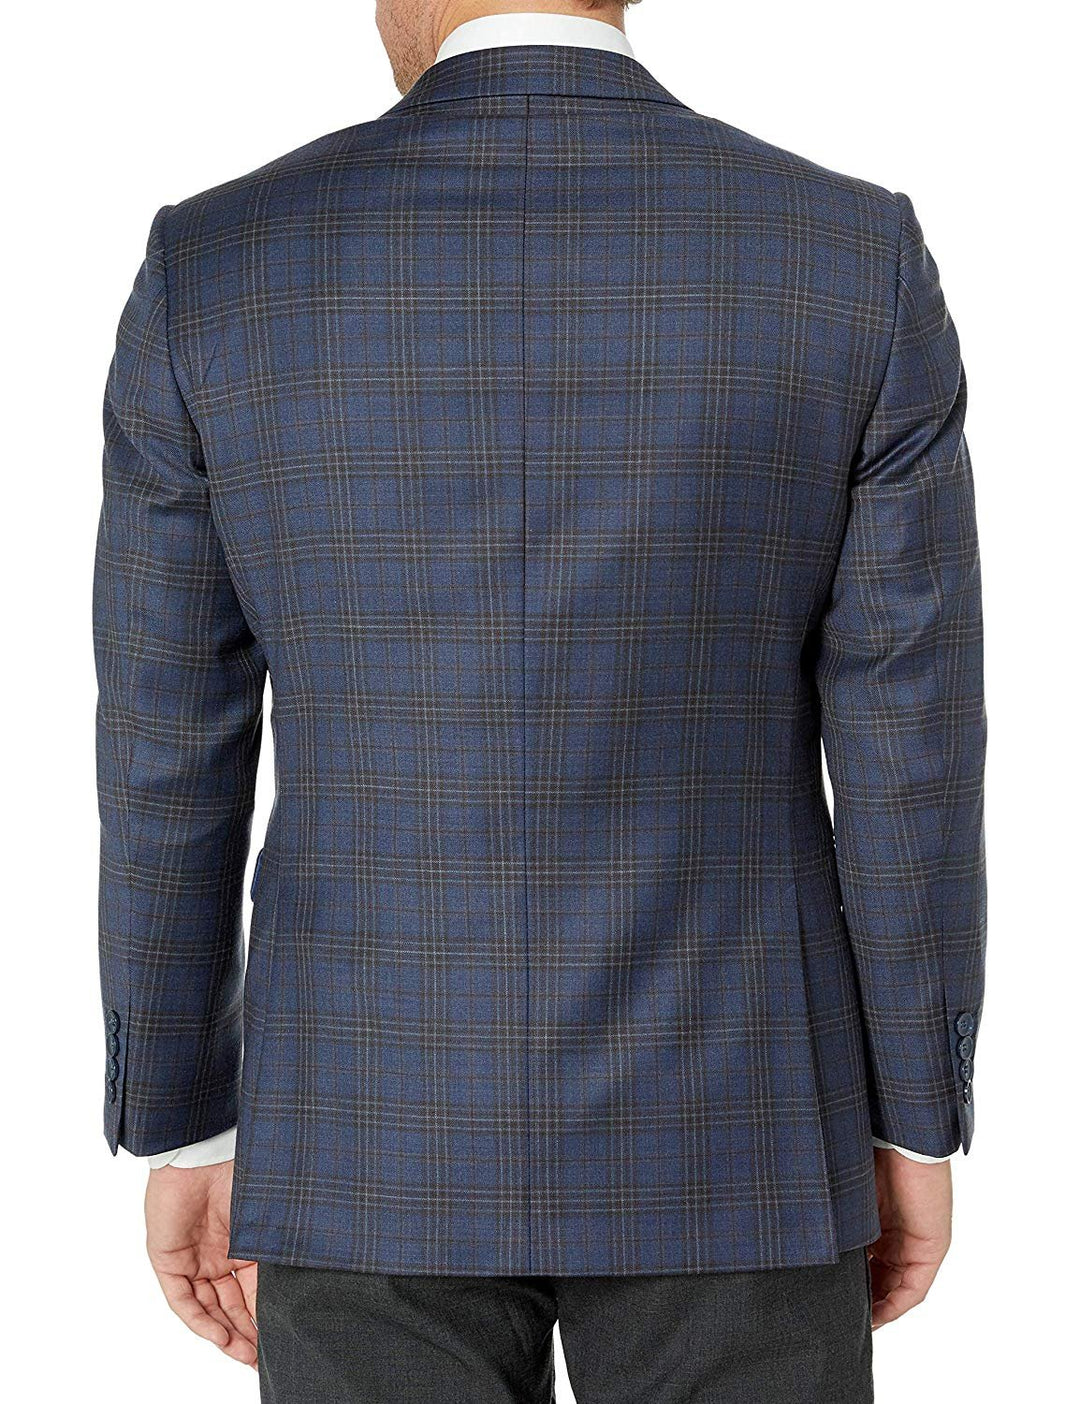 Adam Baker Men's Single Breasted 100% Wool Ultra Slim Fit Blazer/Sport Coat - Navy Plaid